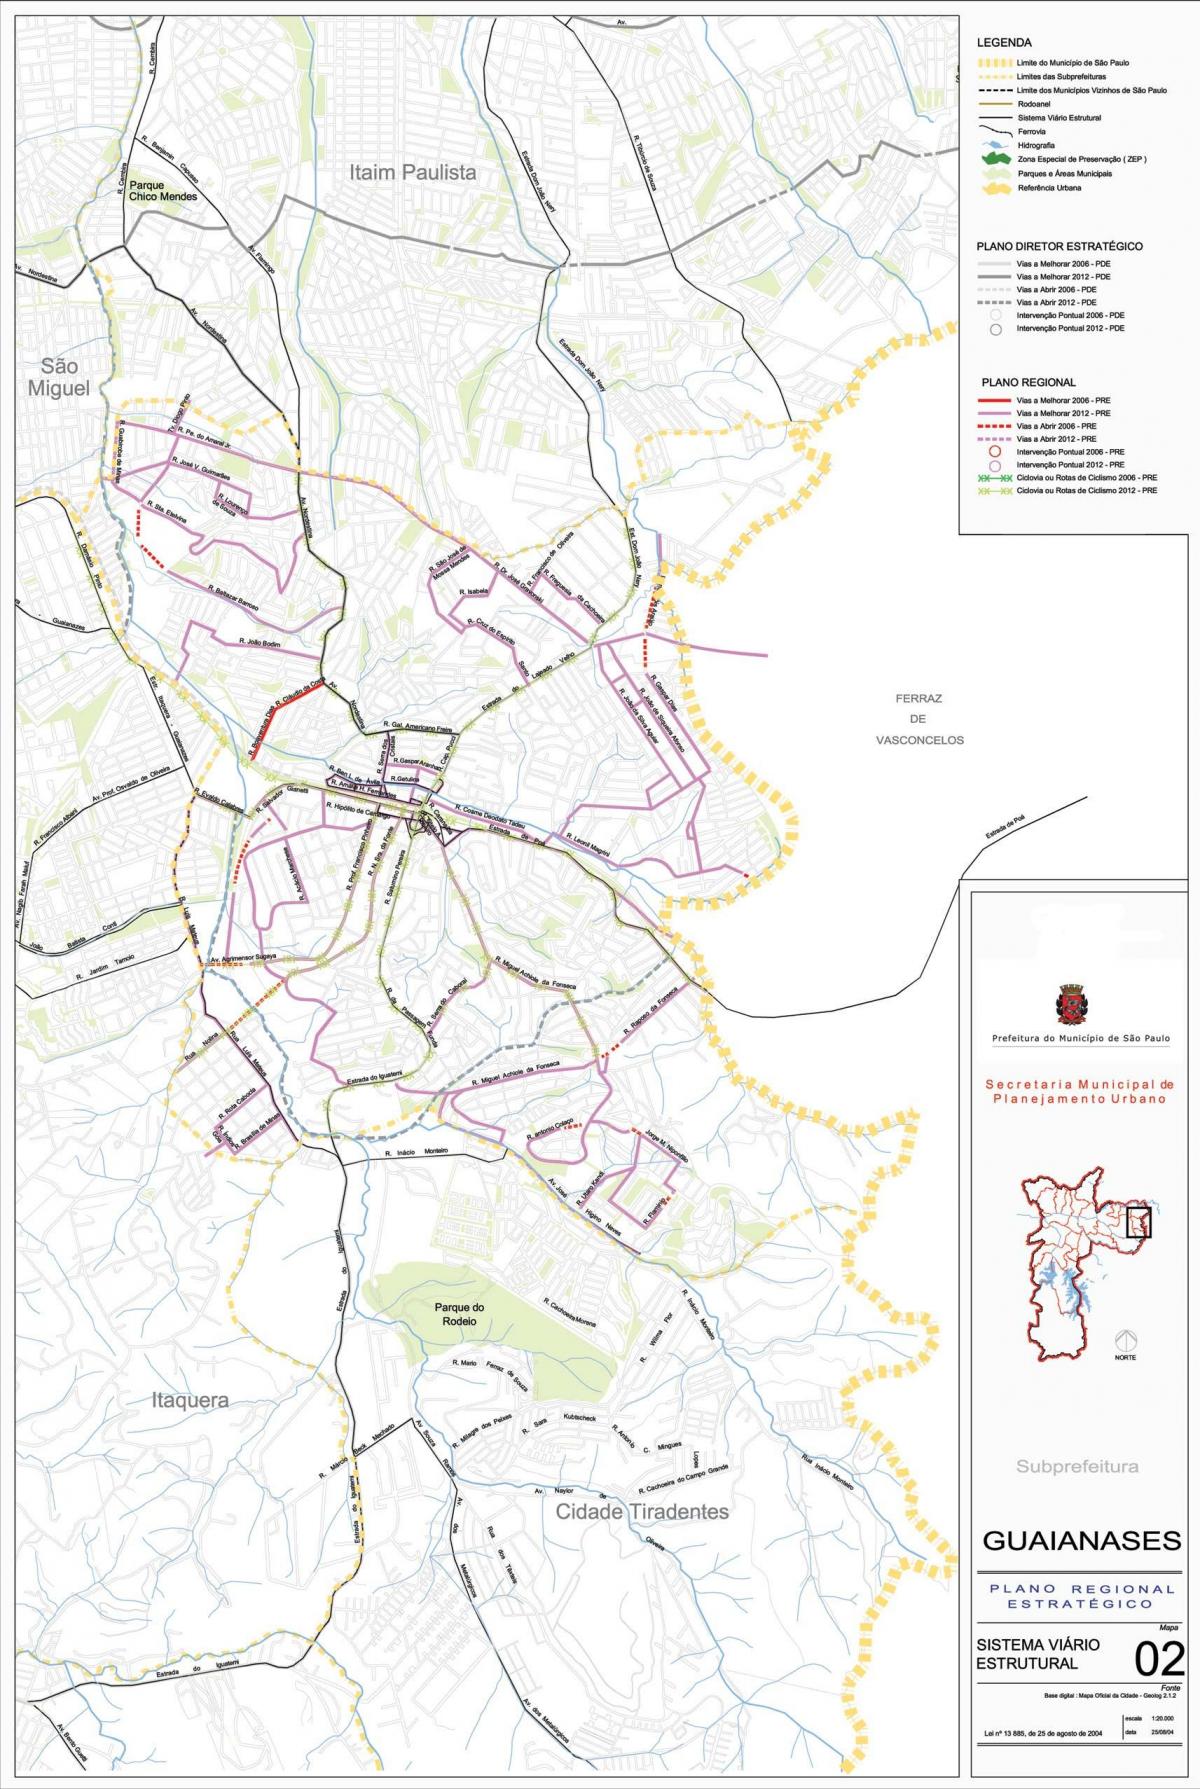 Mapa Guaianases São Paulo - Silnice